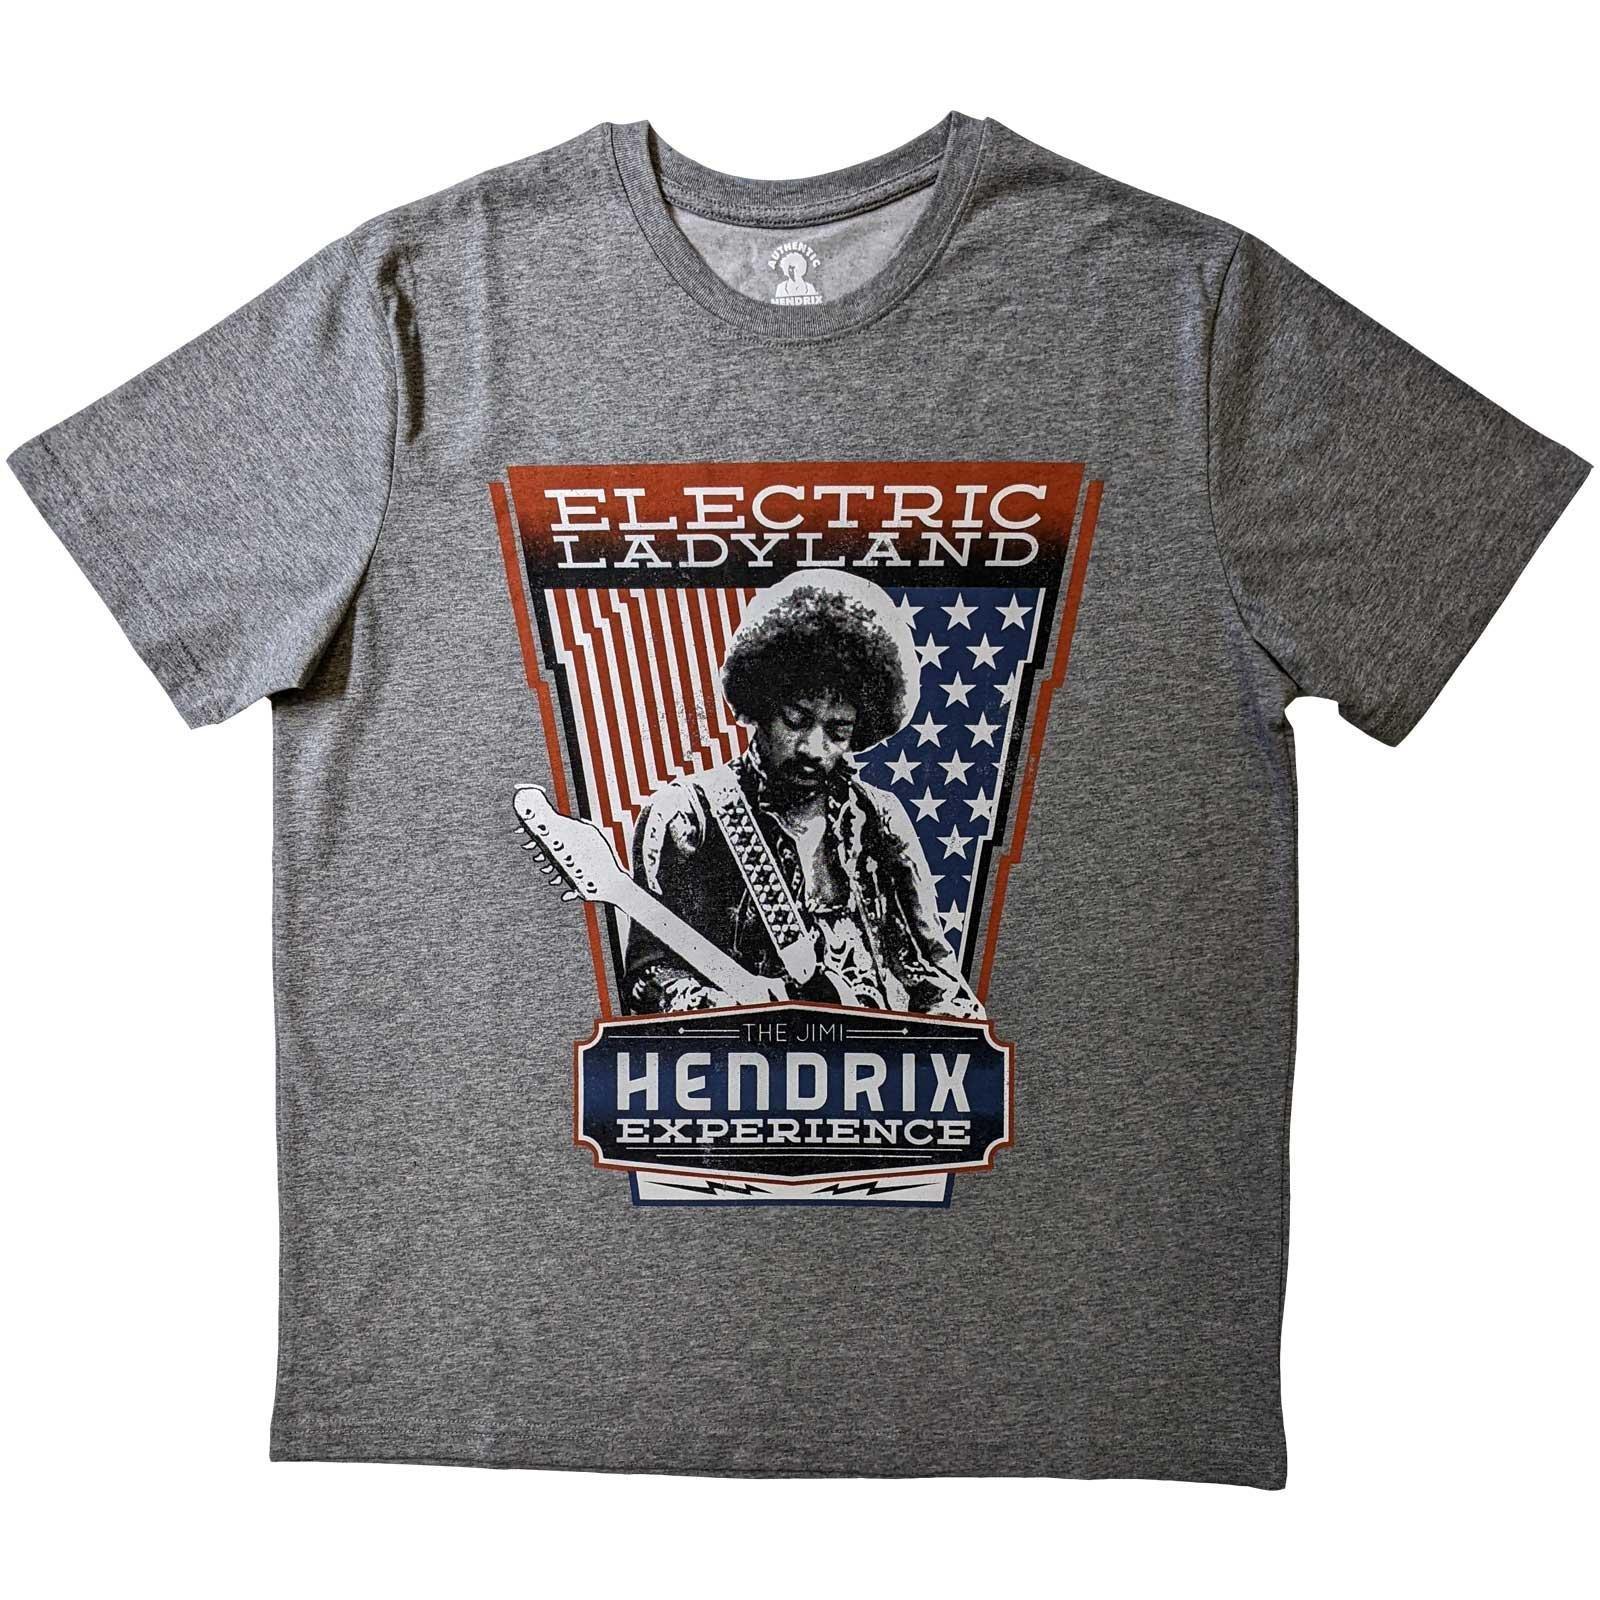 Electric Ladyland Tshirt Damen Grau S von Jimi Hendrix